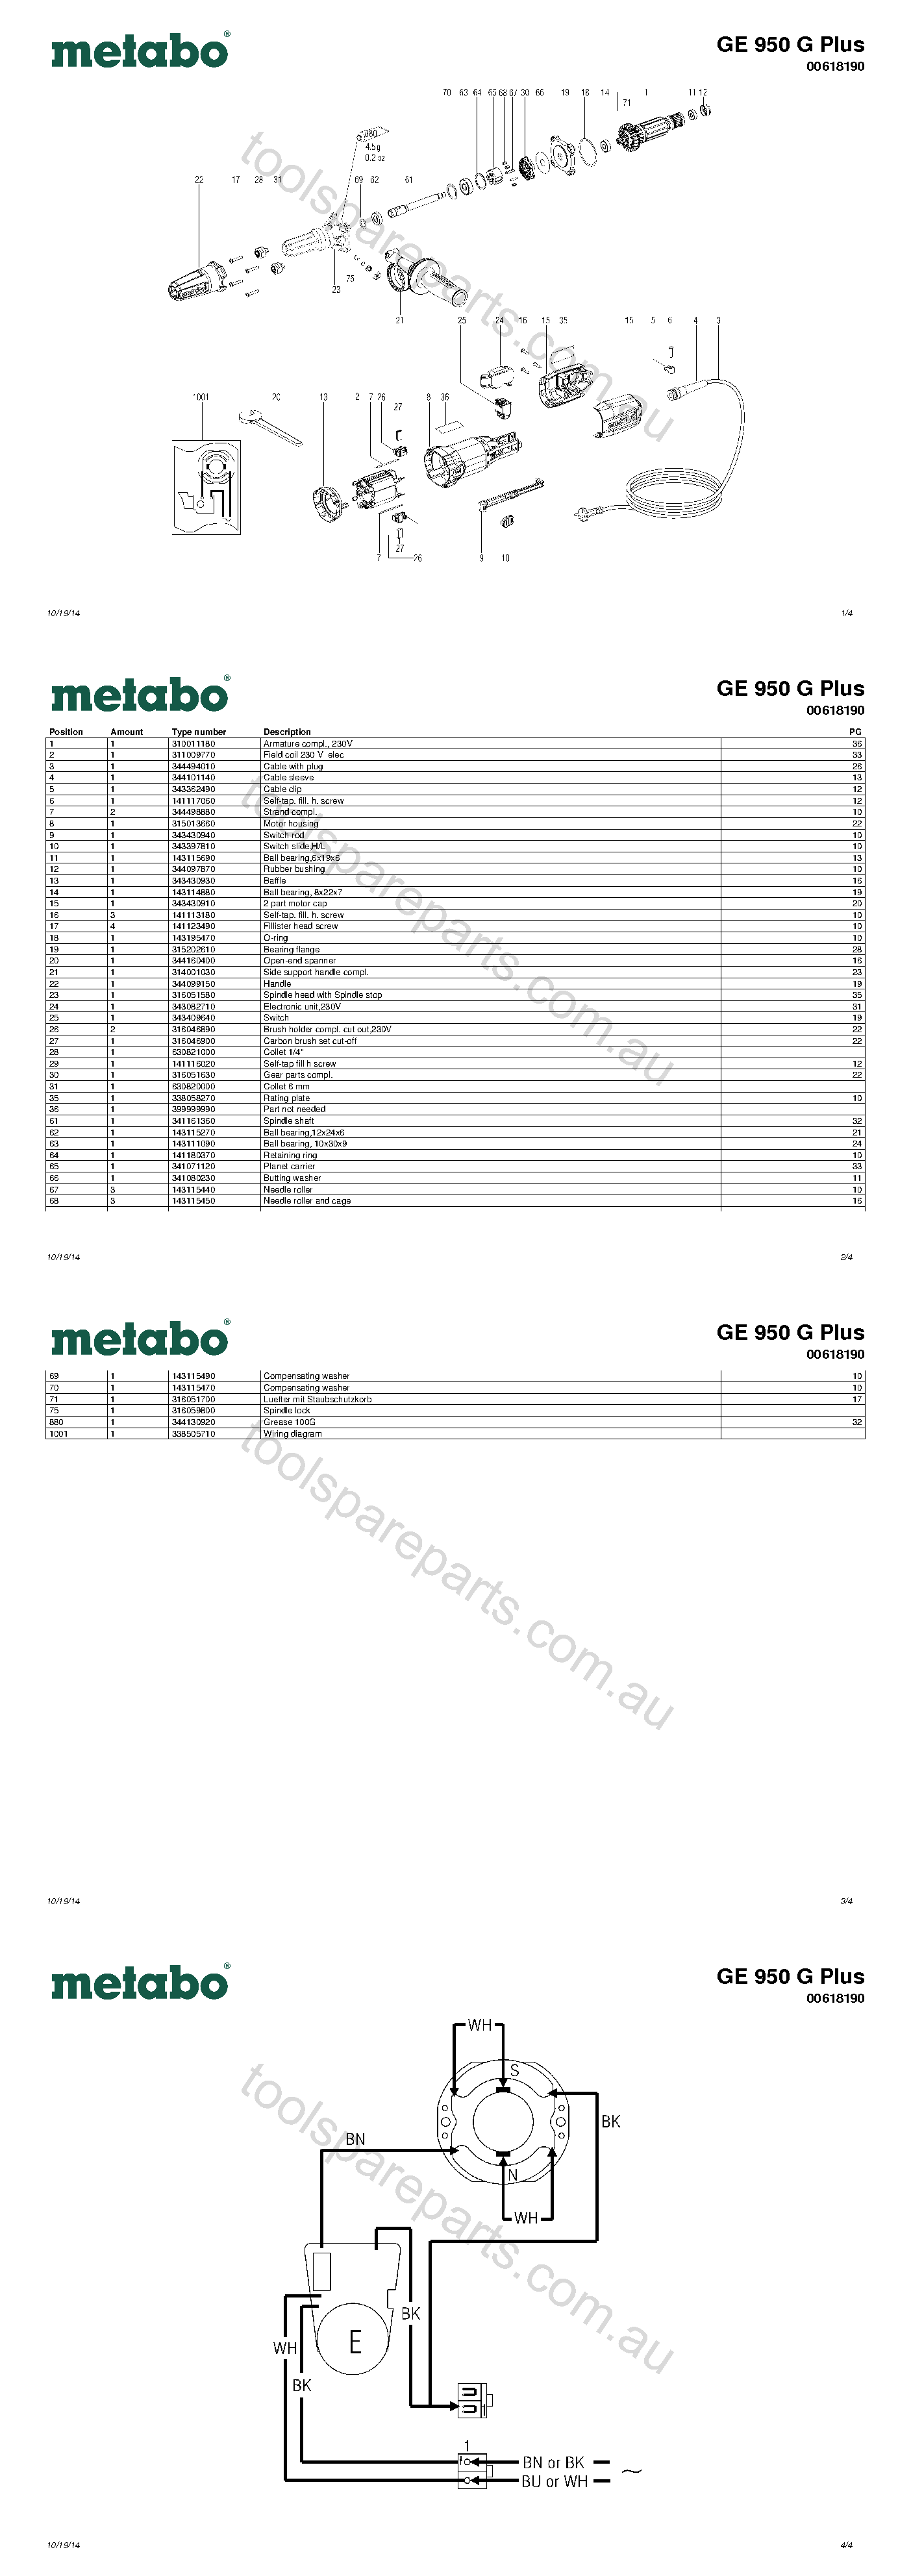 Metabo GE 950 G Plus 00618190  Diagram 1